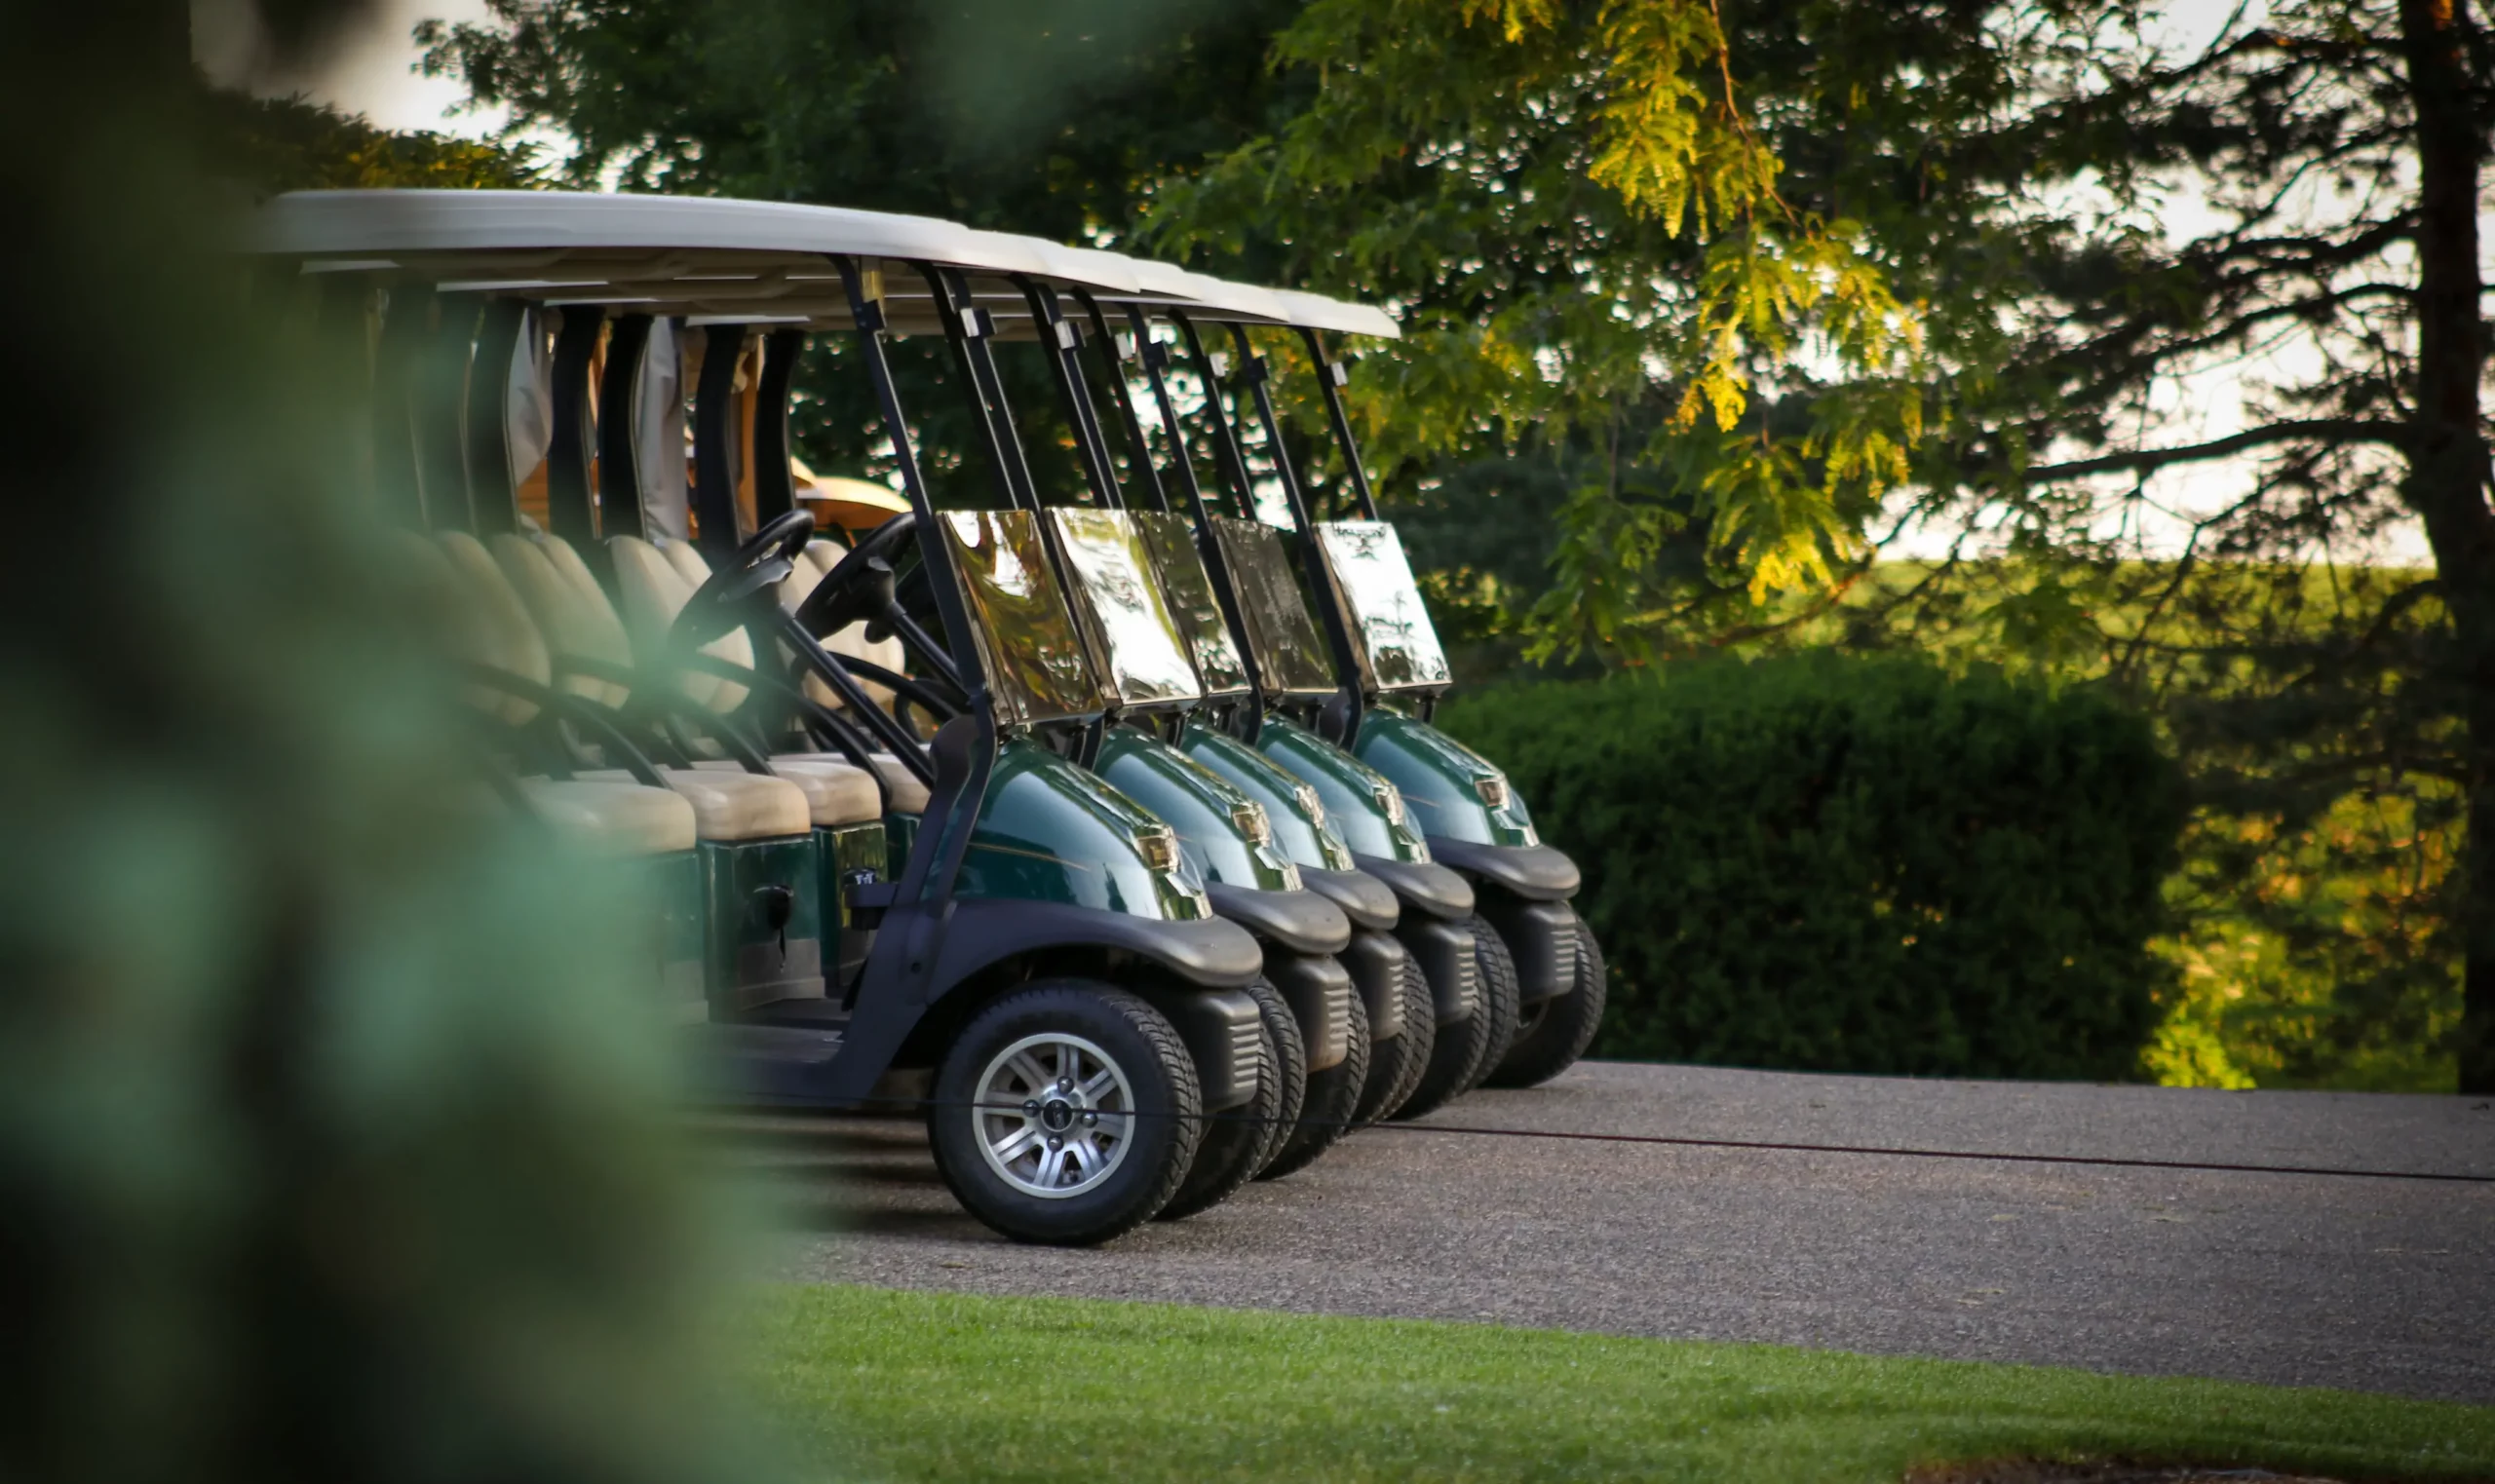 A row of golf carts parked at Maderas Golf Club